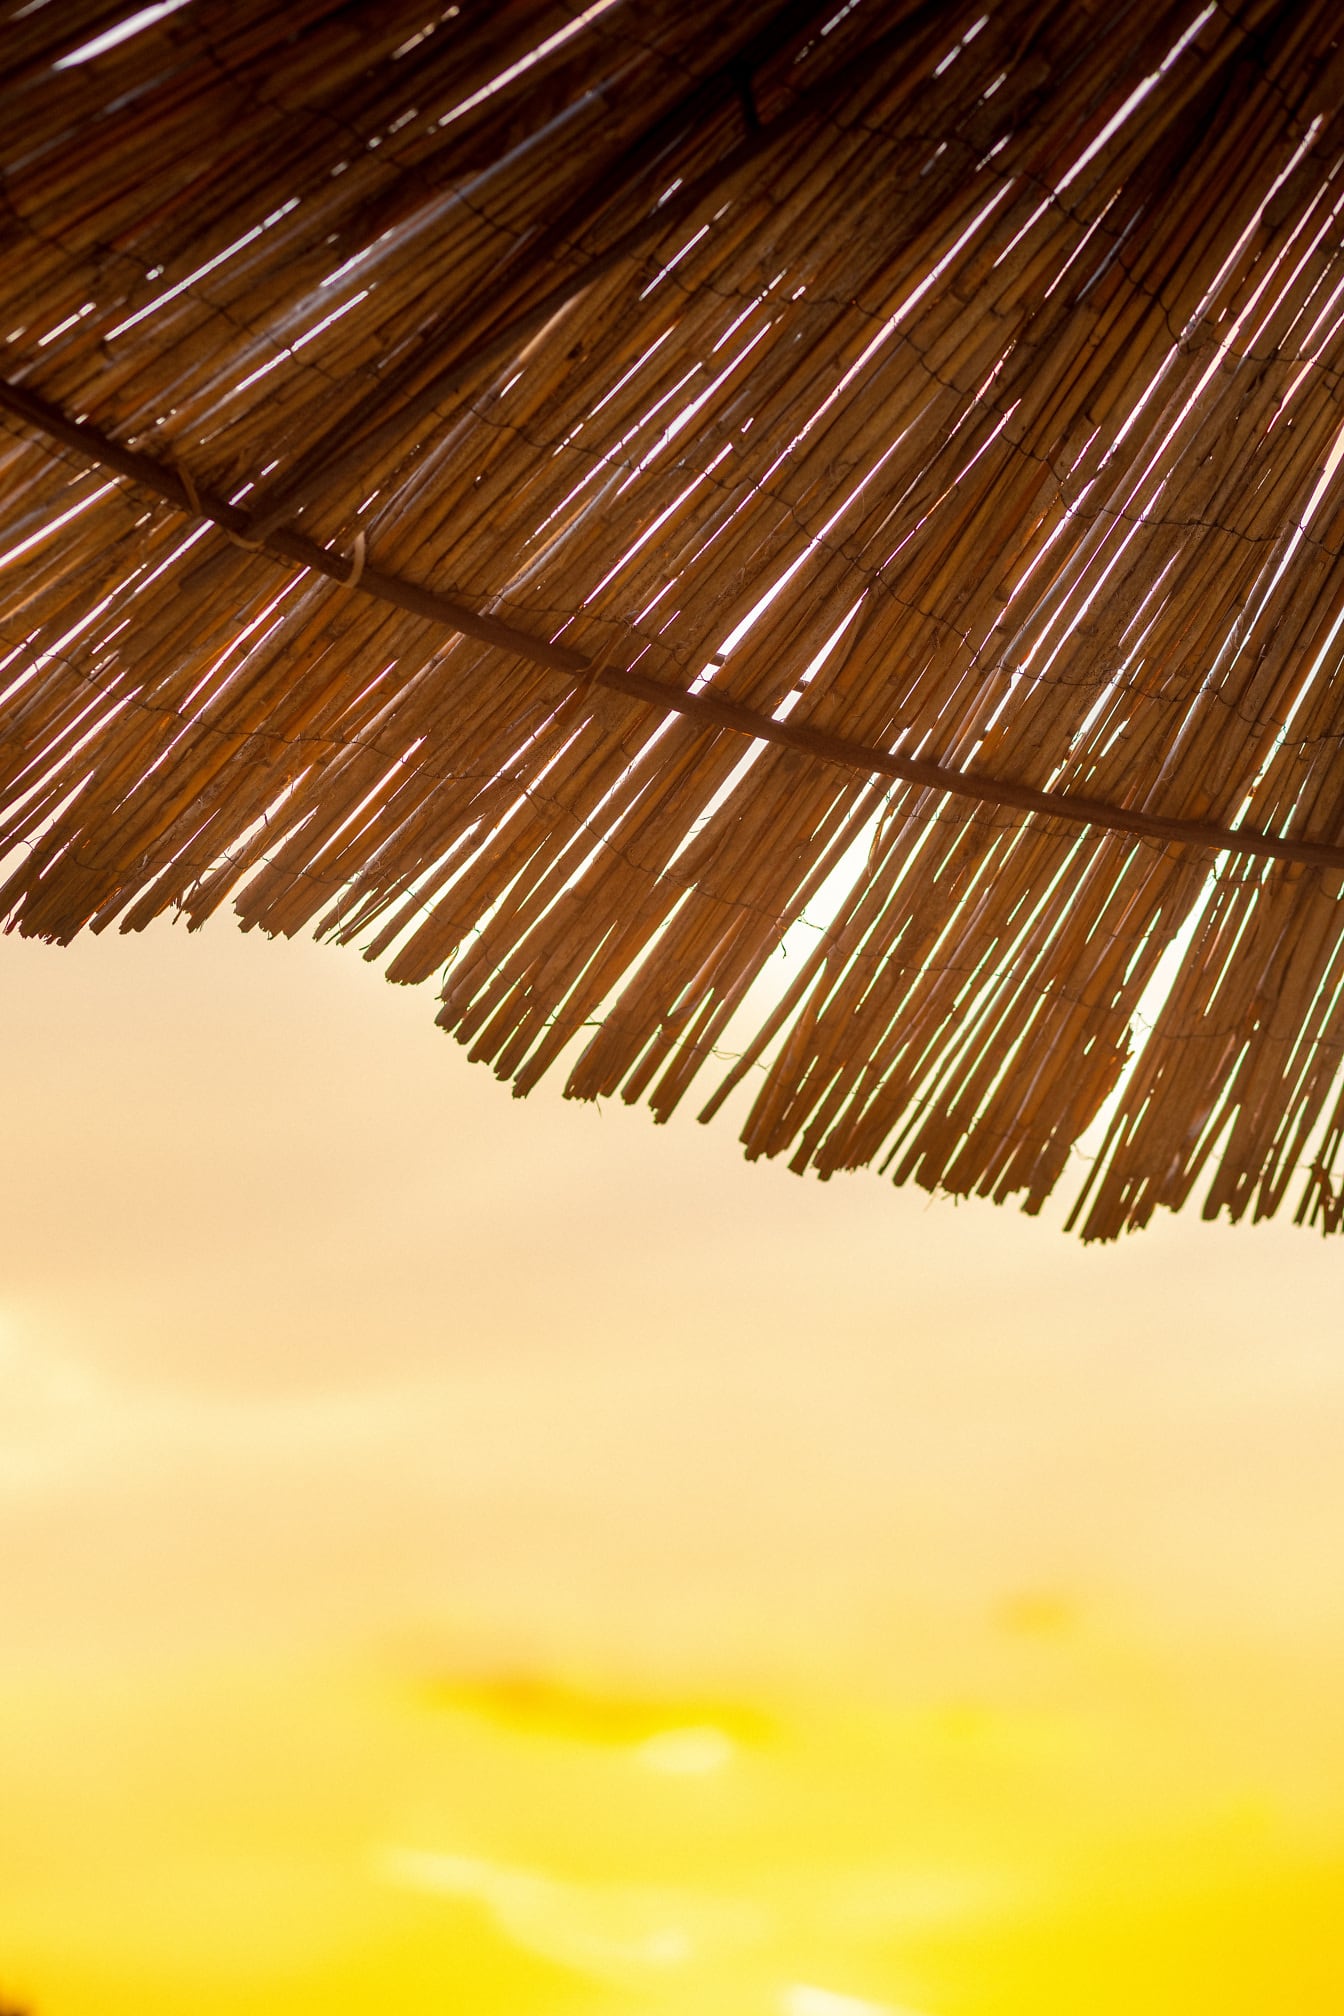 Parasoltag med lysegul himmelglød i baggrunden